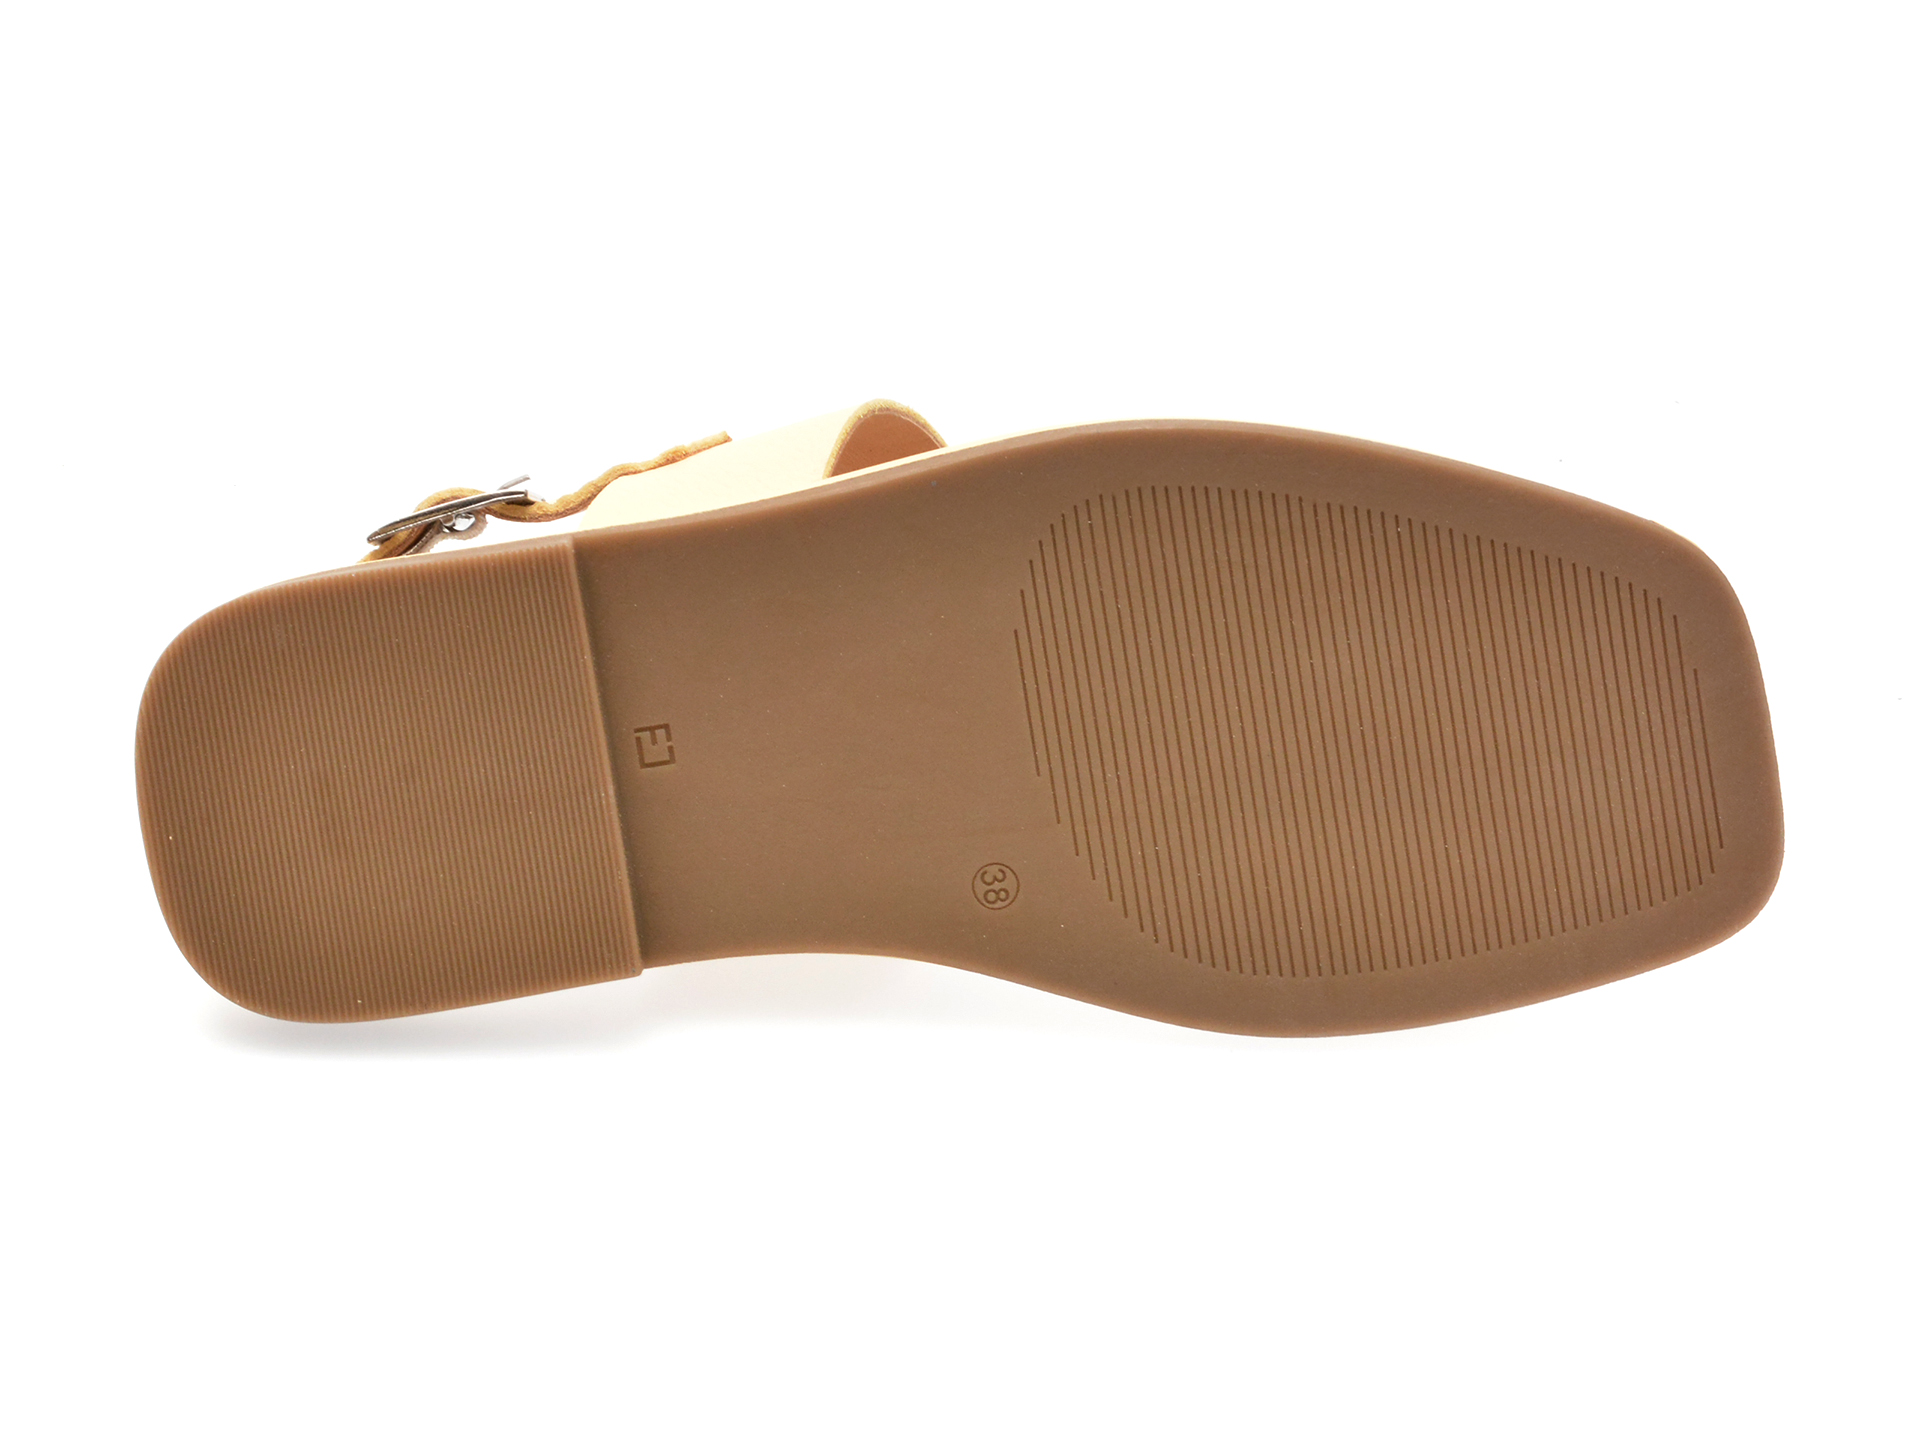 Sandale FLAVIA PASSINI galbene, 5001801, din piele naturala